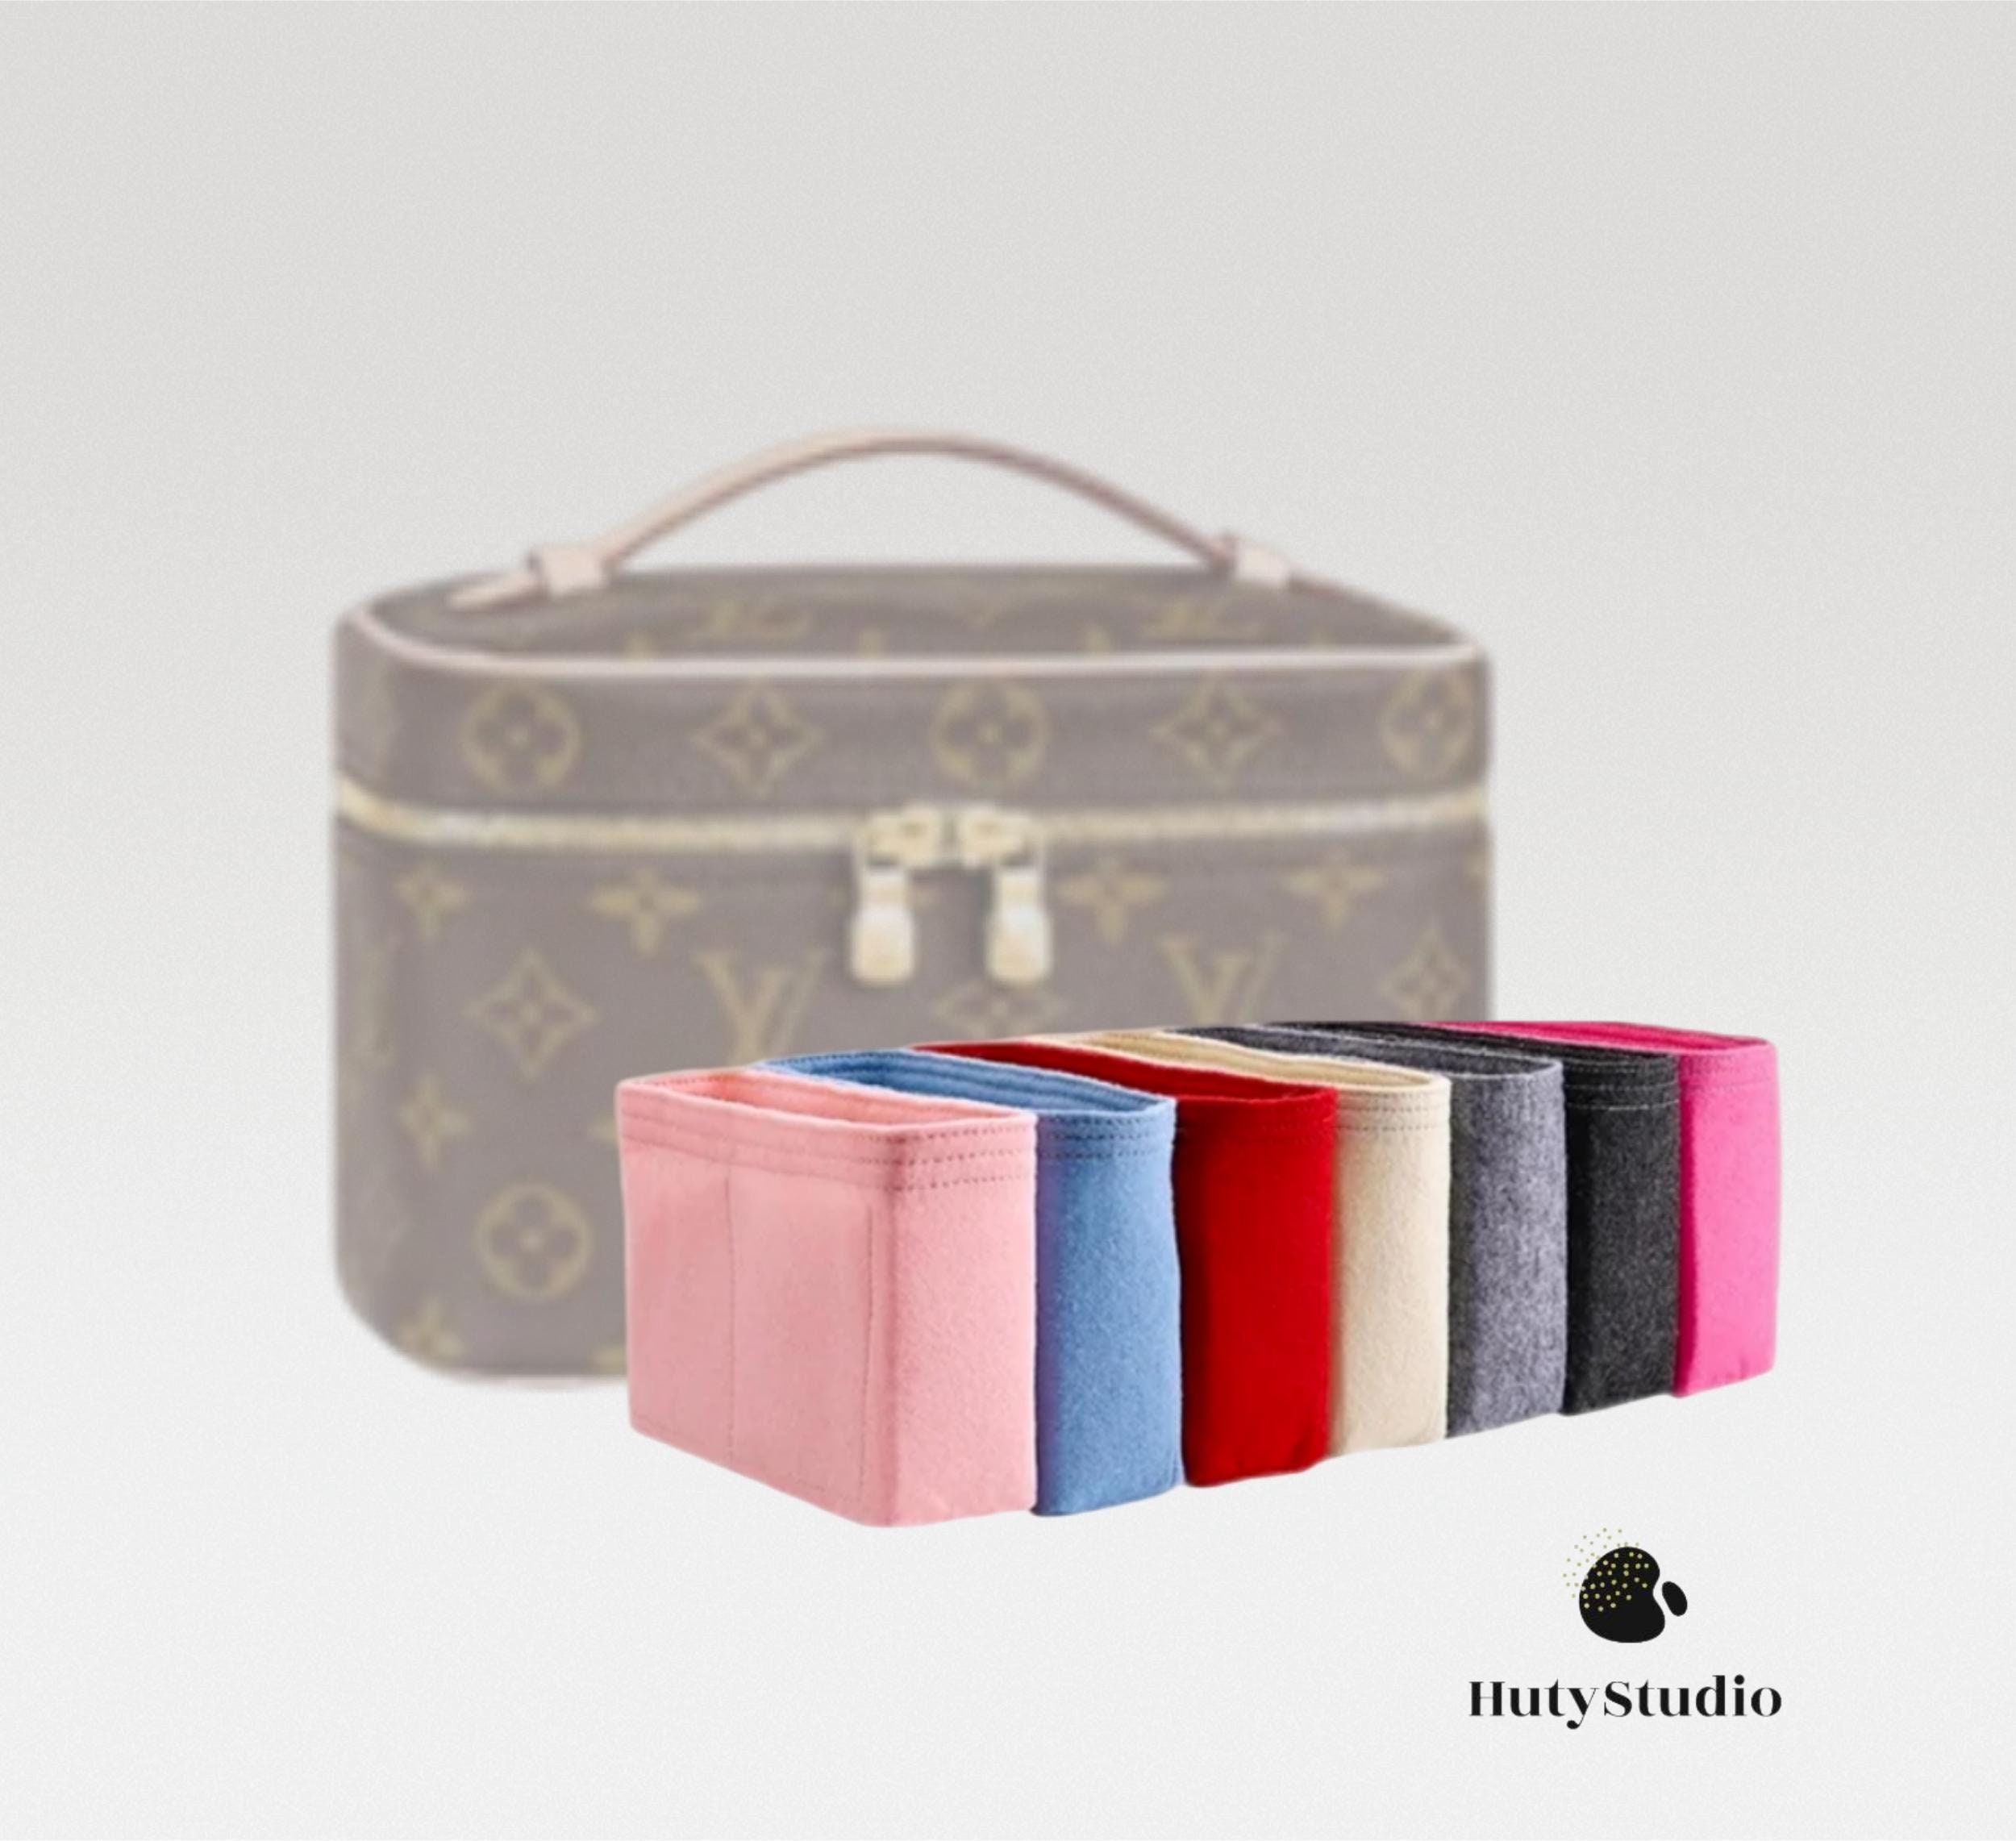 Suitable for Lv—Nice Nano Mini BB Bag Organizer, Liner Bag, Bag In